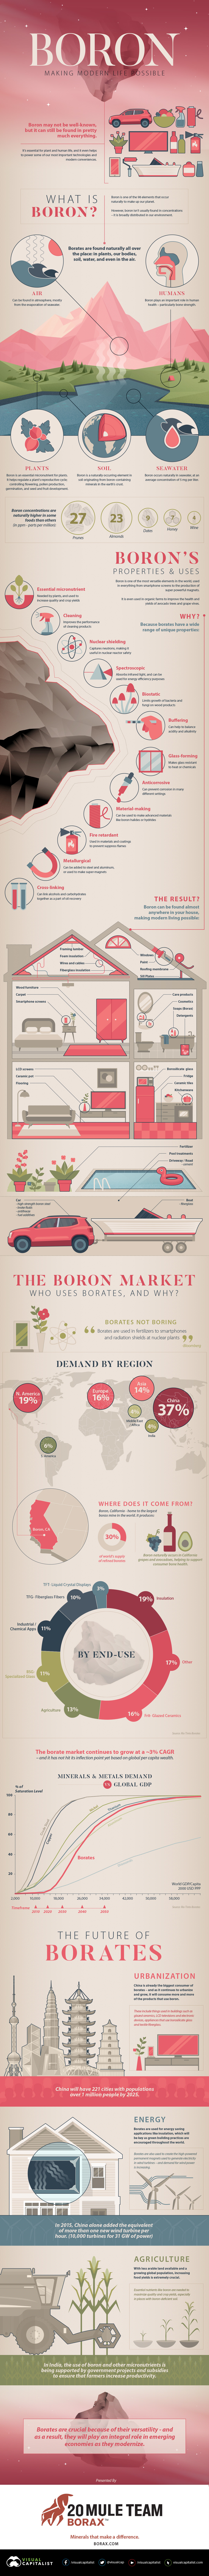 Boron: Making Modern Life Possible